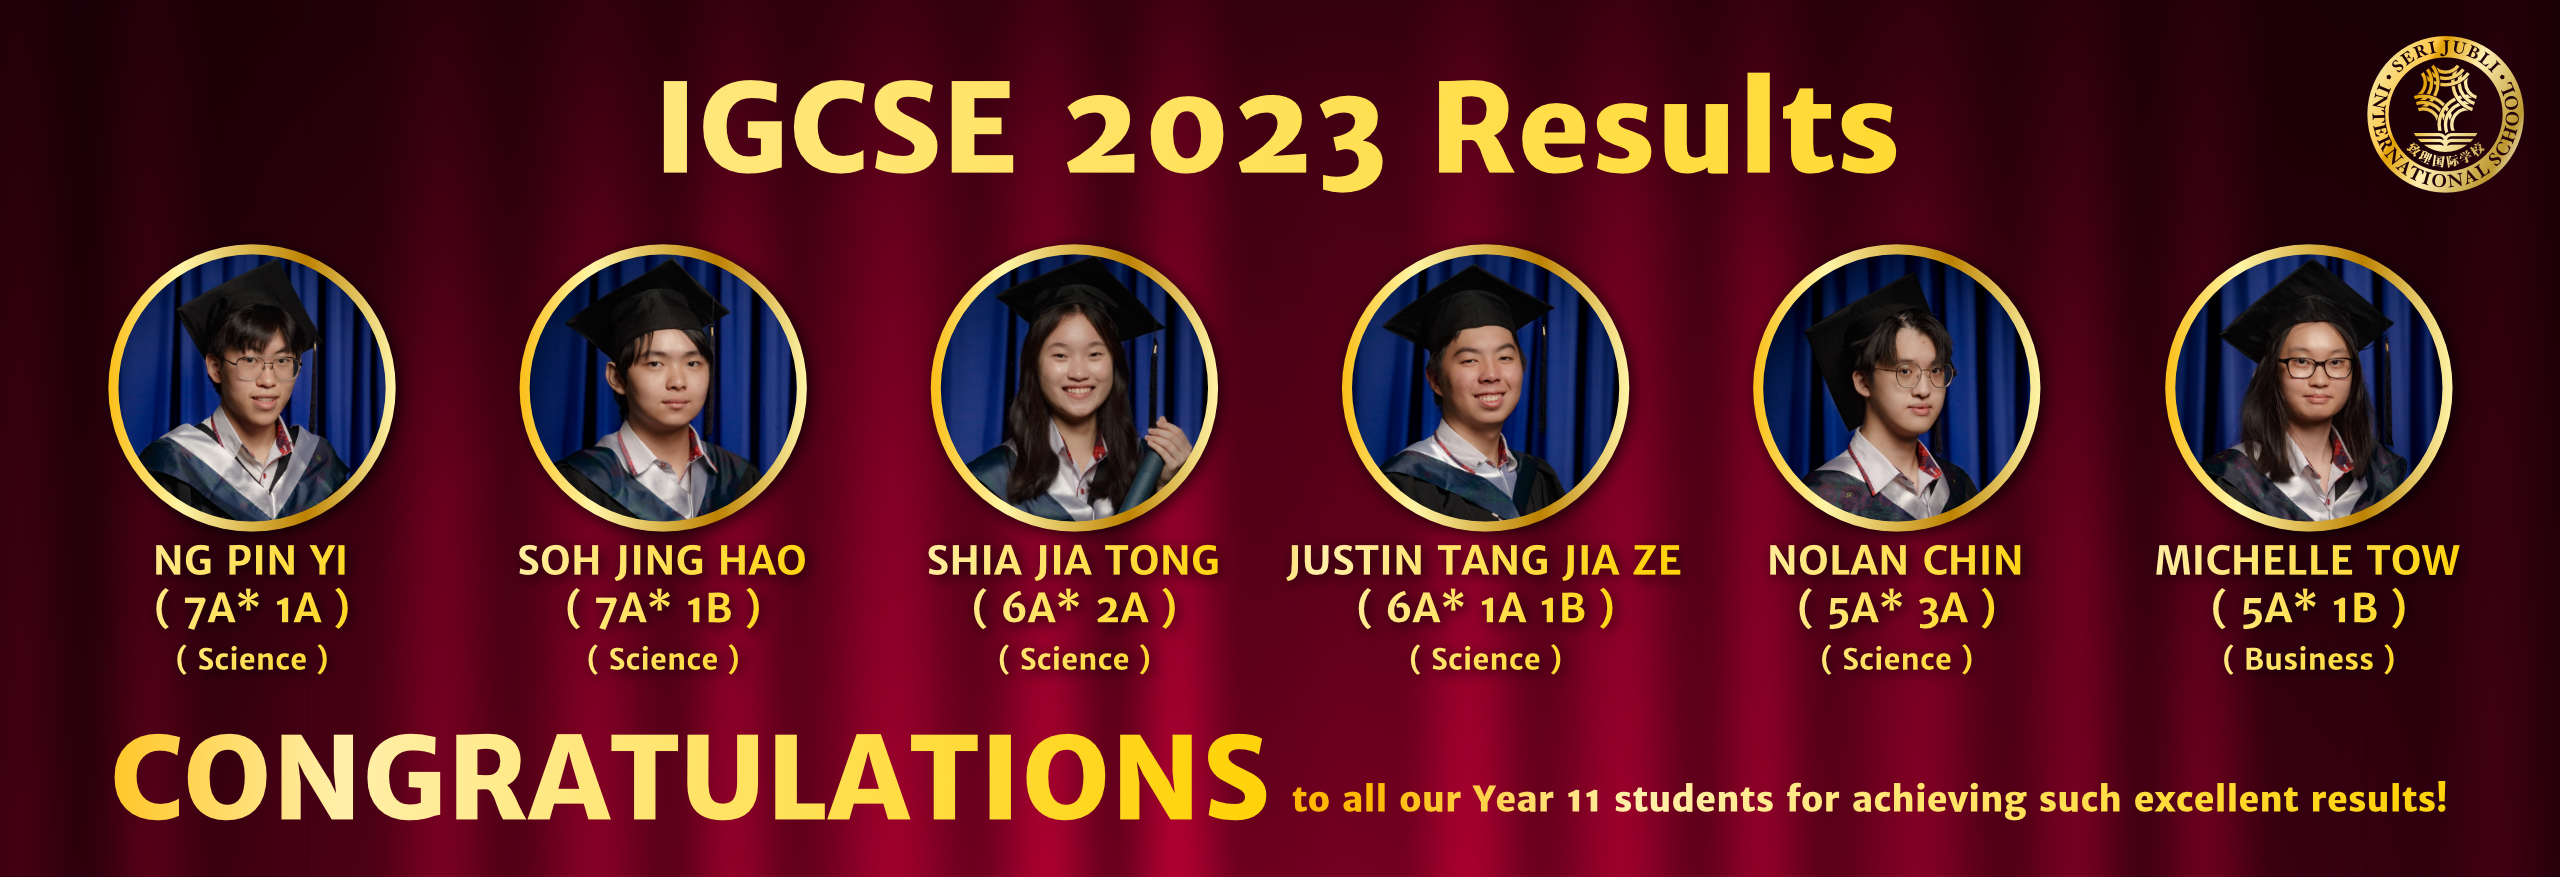 2023 IGCSE Result 3